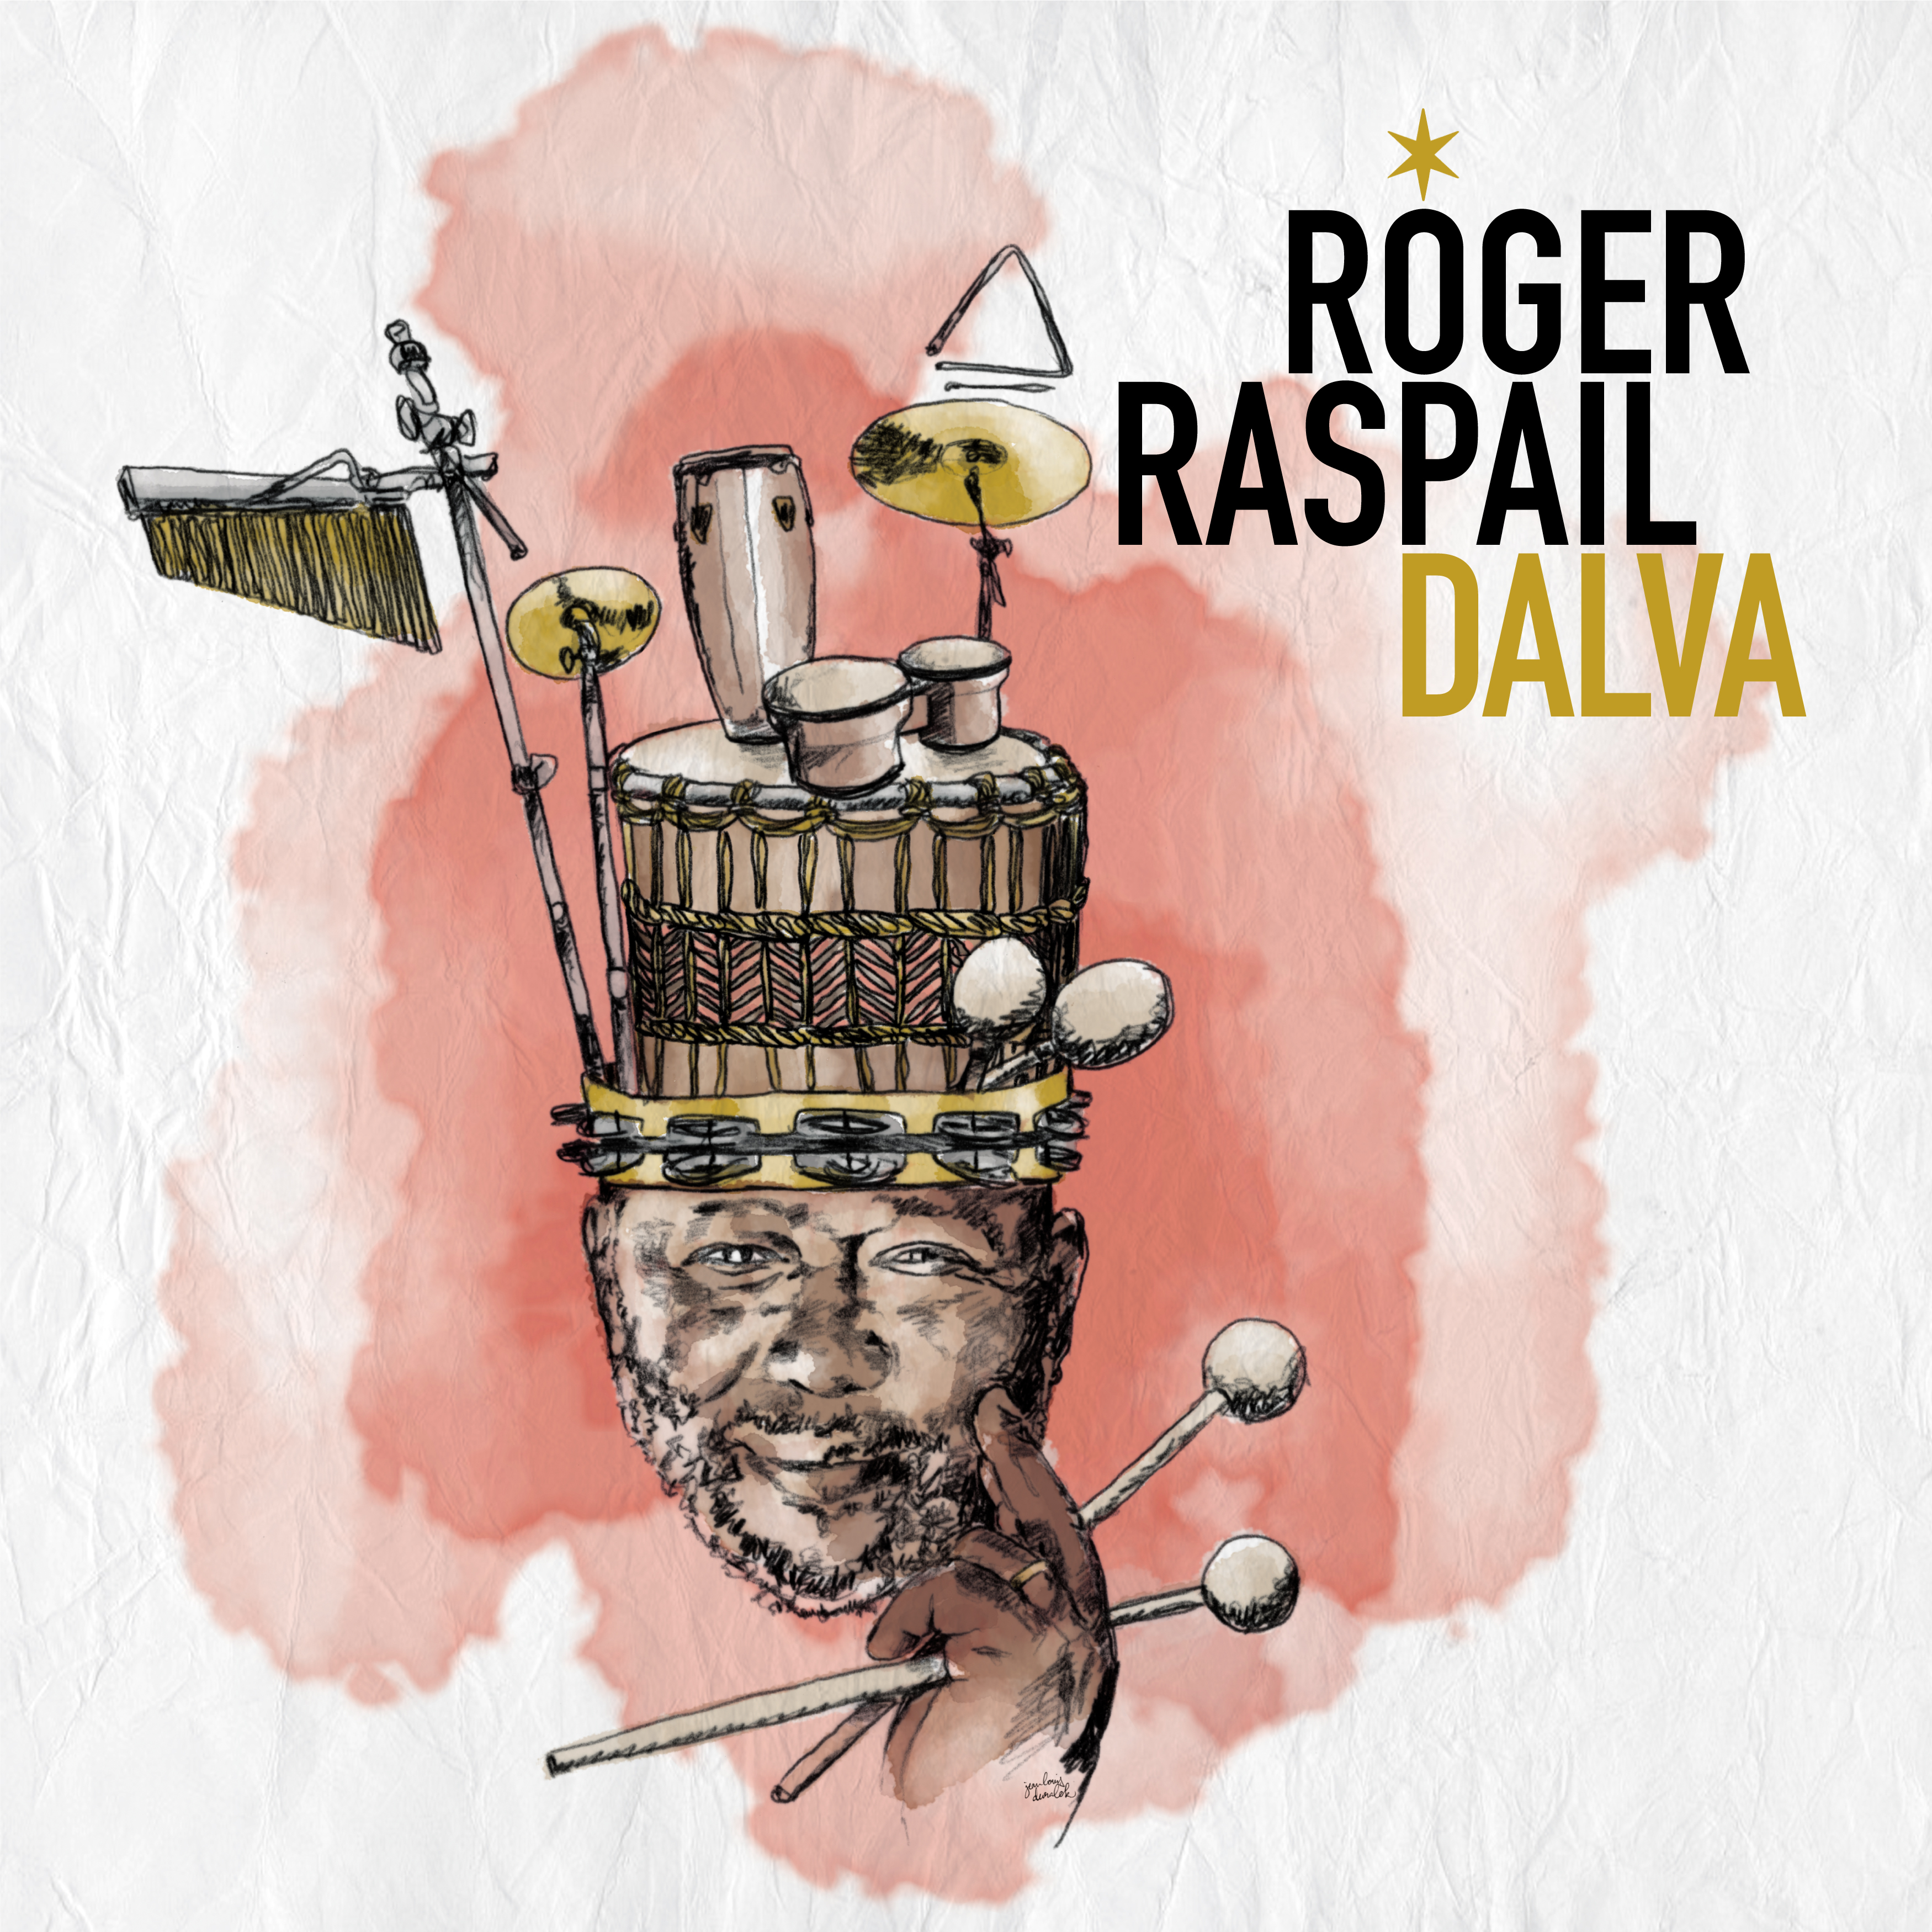 Roger Raspail Dalva Cyrille Daumont